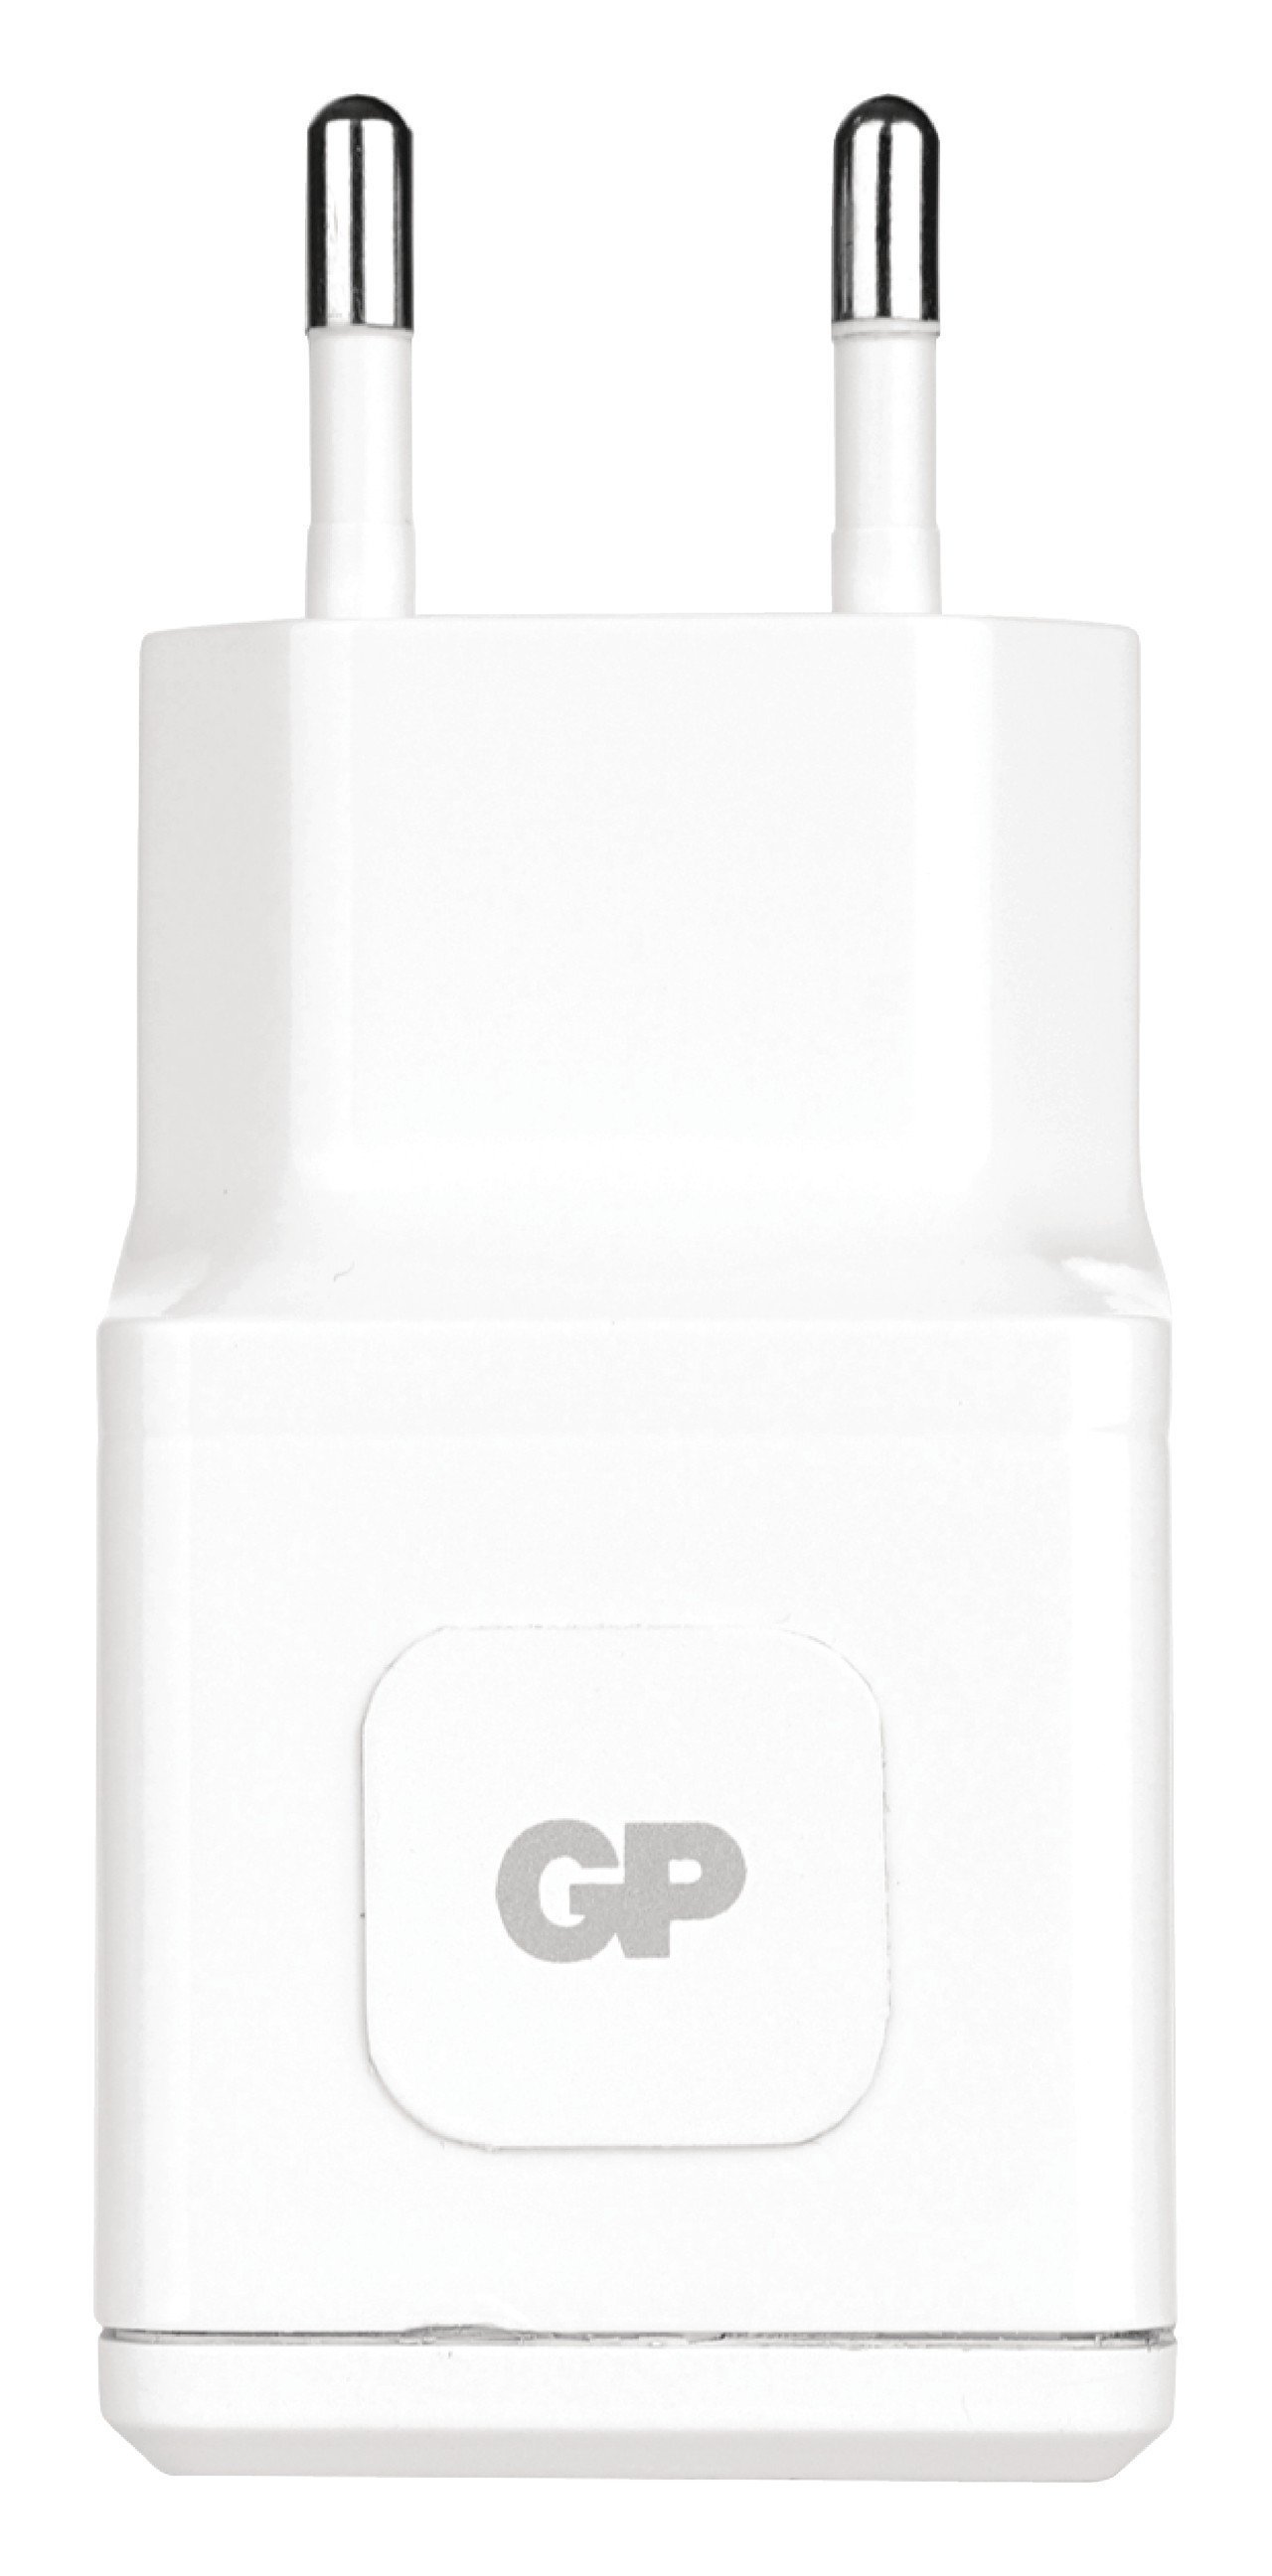 Сетевой адаптер питания GP USB Wall charger 5V 2.4A 12W WA21 - фото3